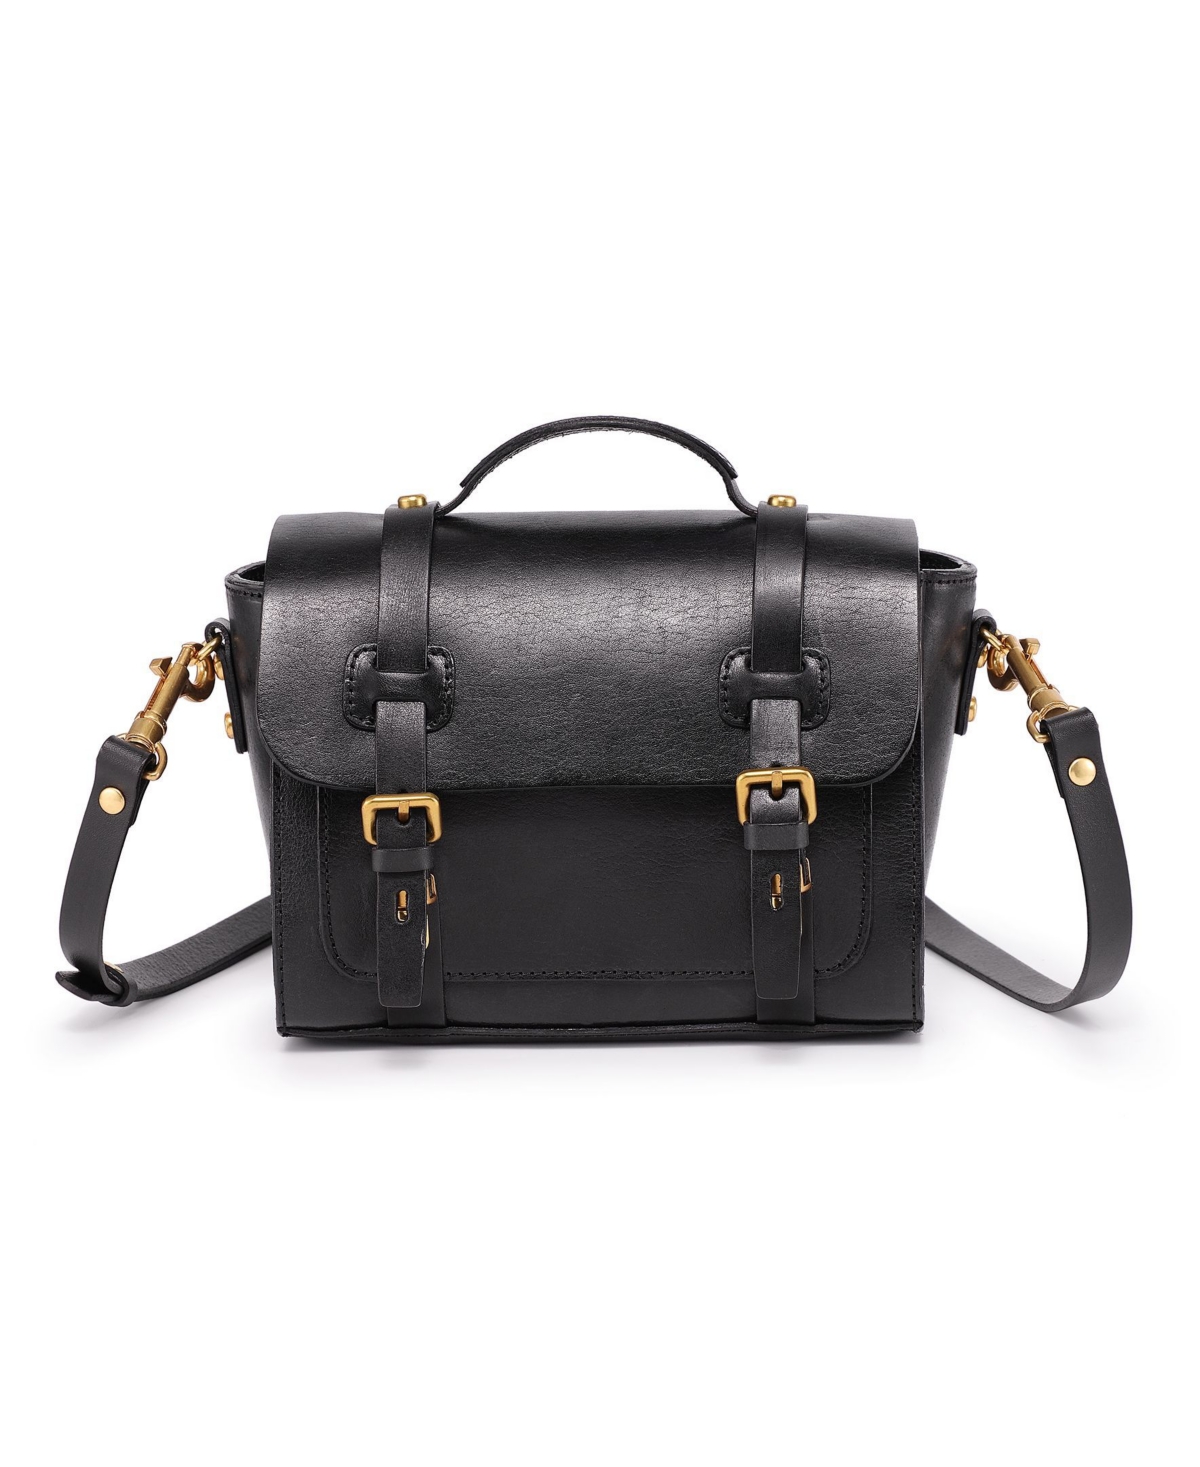 Women's Genuine Leather Focus Mini Satchel Bag - Teal